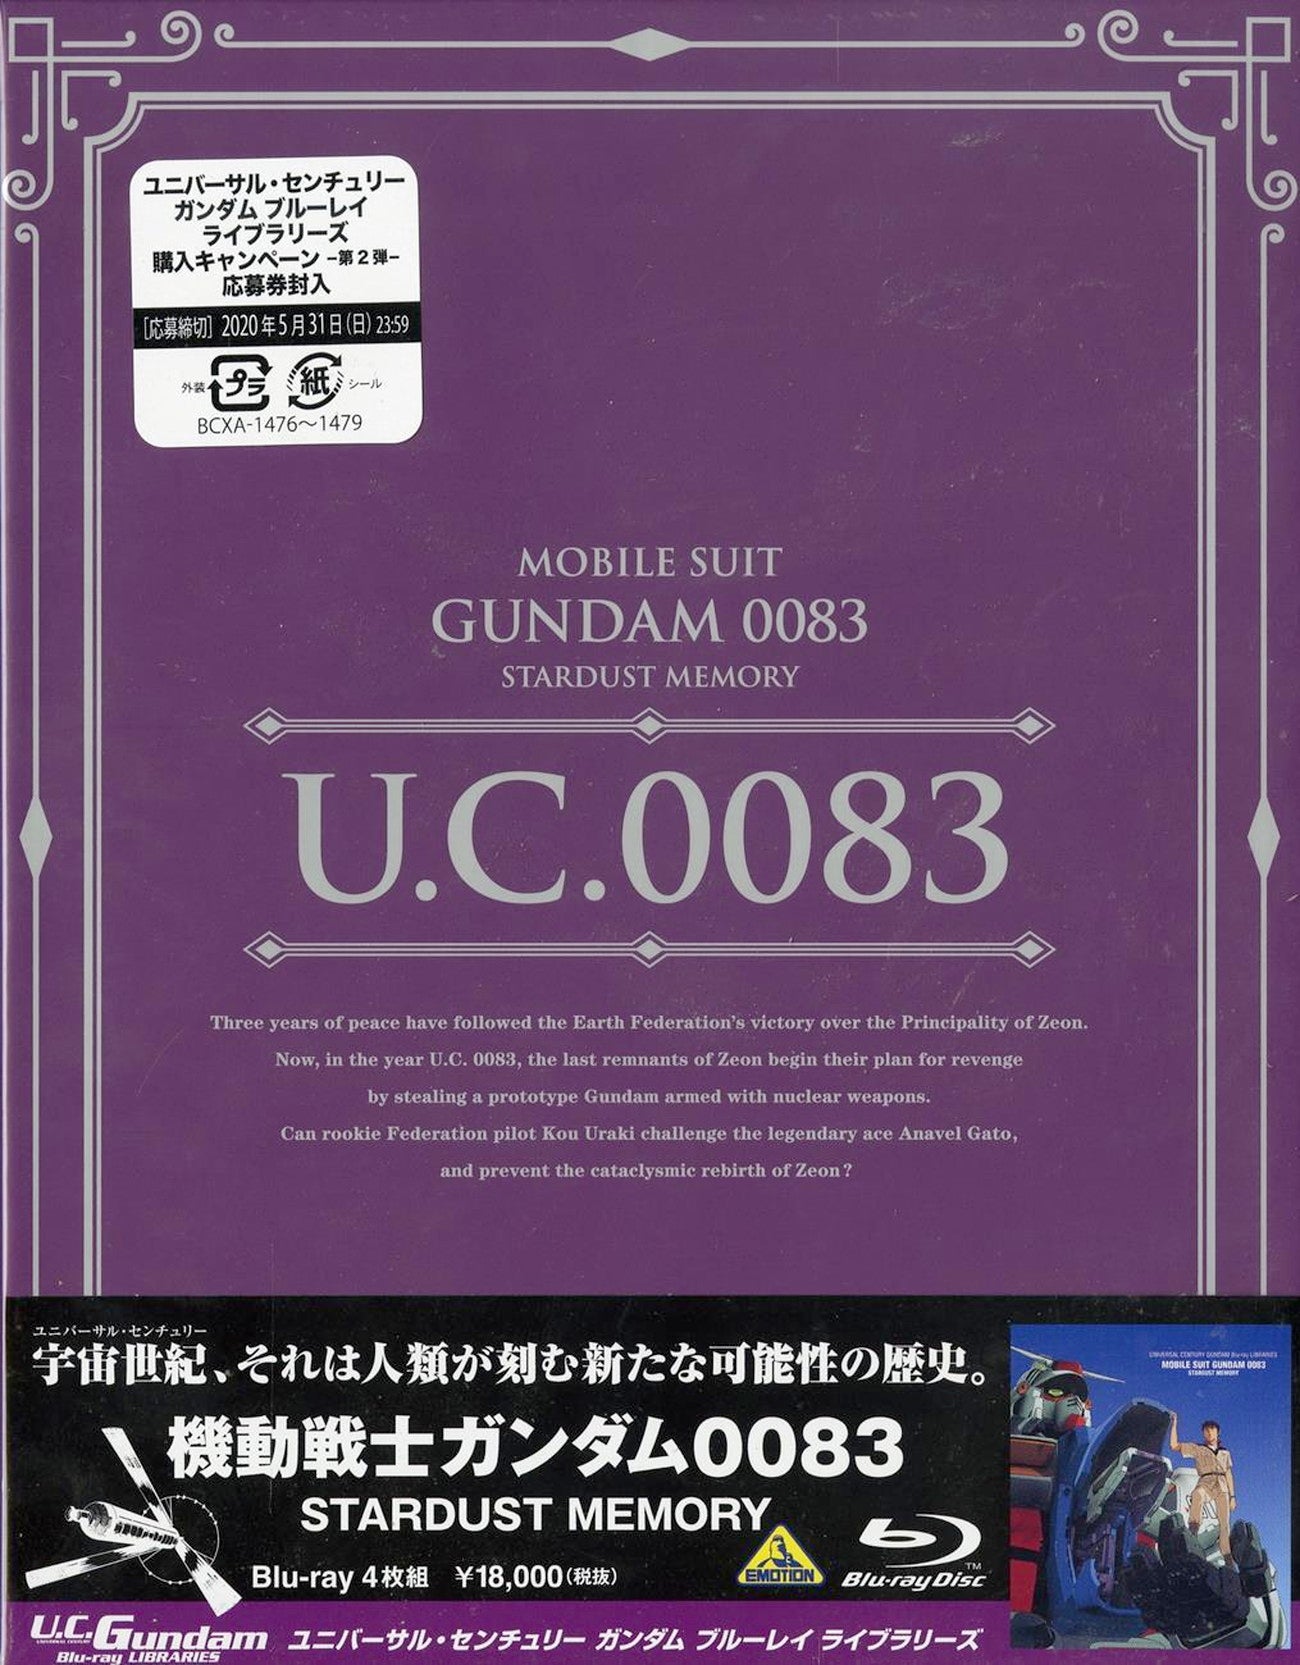 Animation - Mobile Suit Gundam 0083: STARDUST MEMORY (Subtitles: English, Chinese) / U.C.Gundam Blu-ray Library Series - Japan Blu-ray Disc